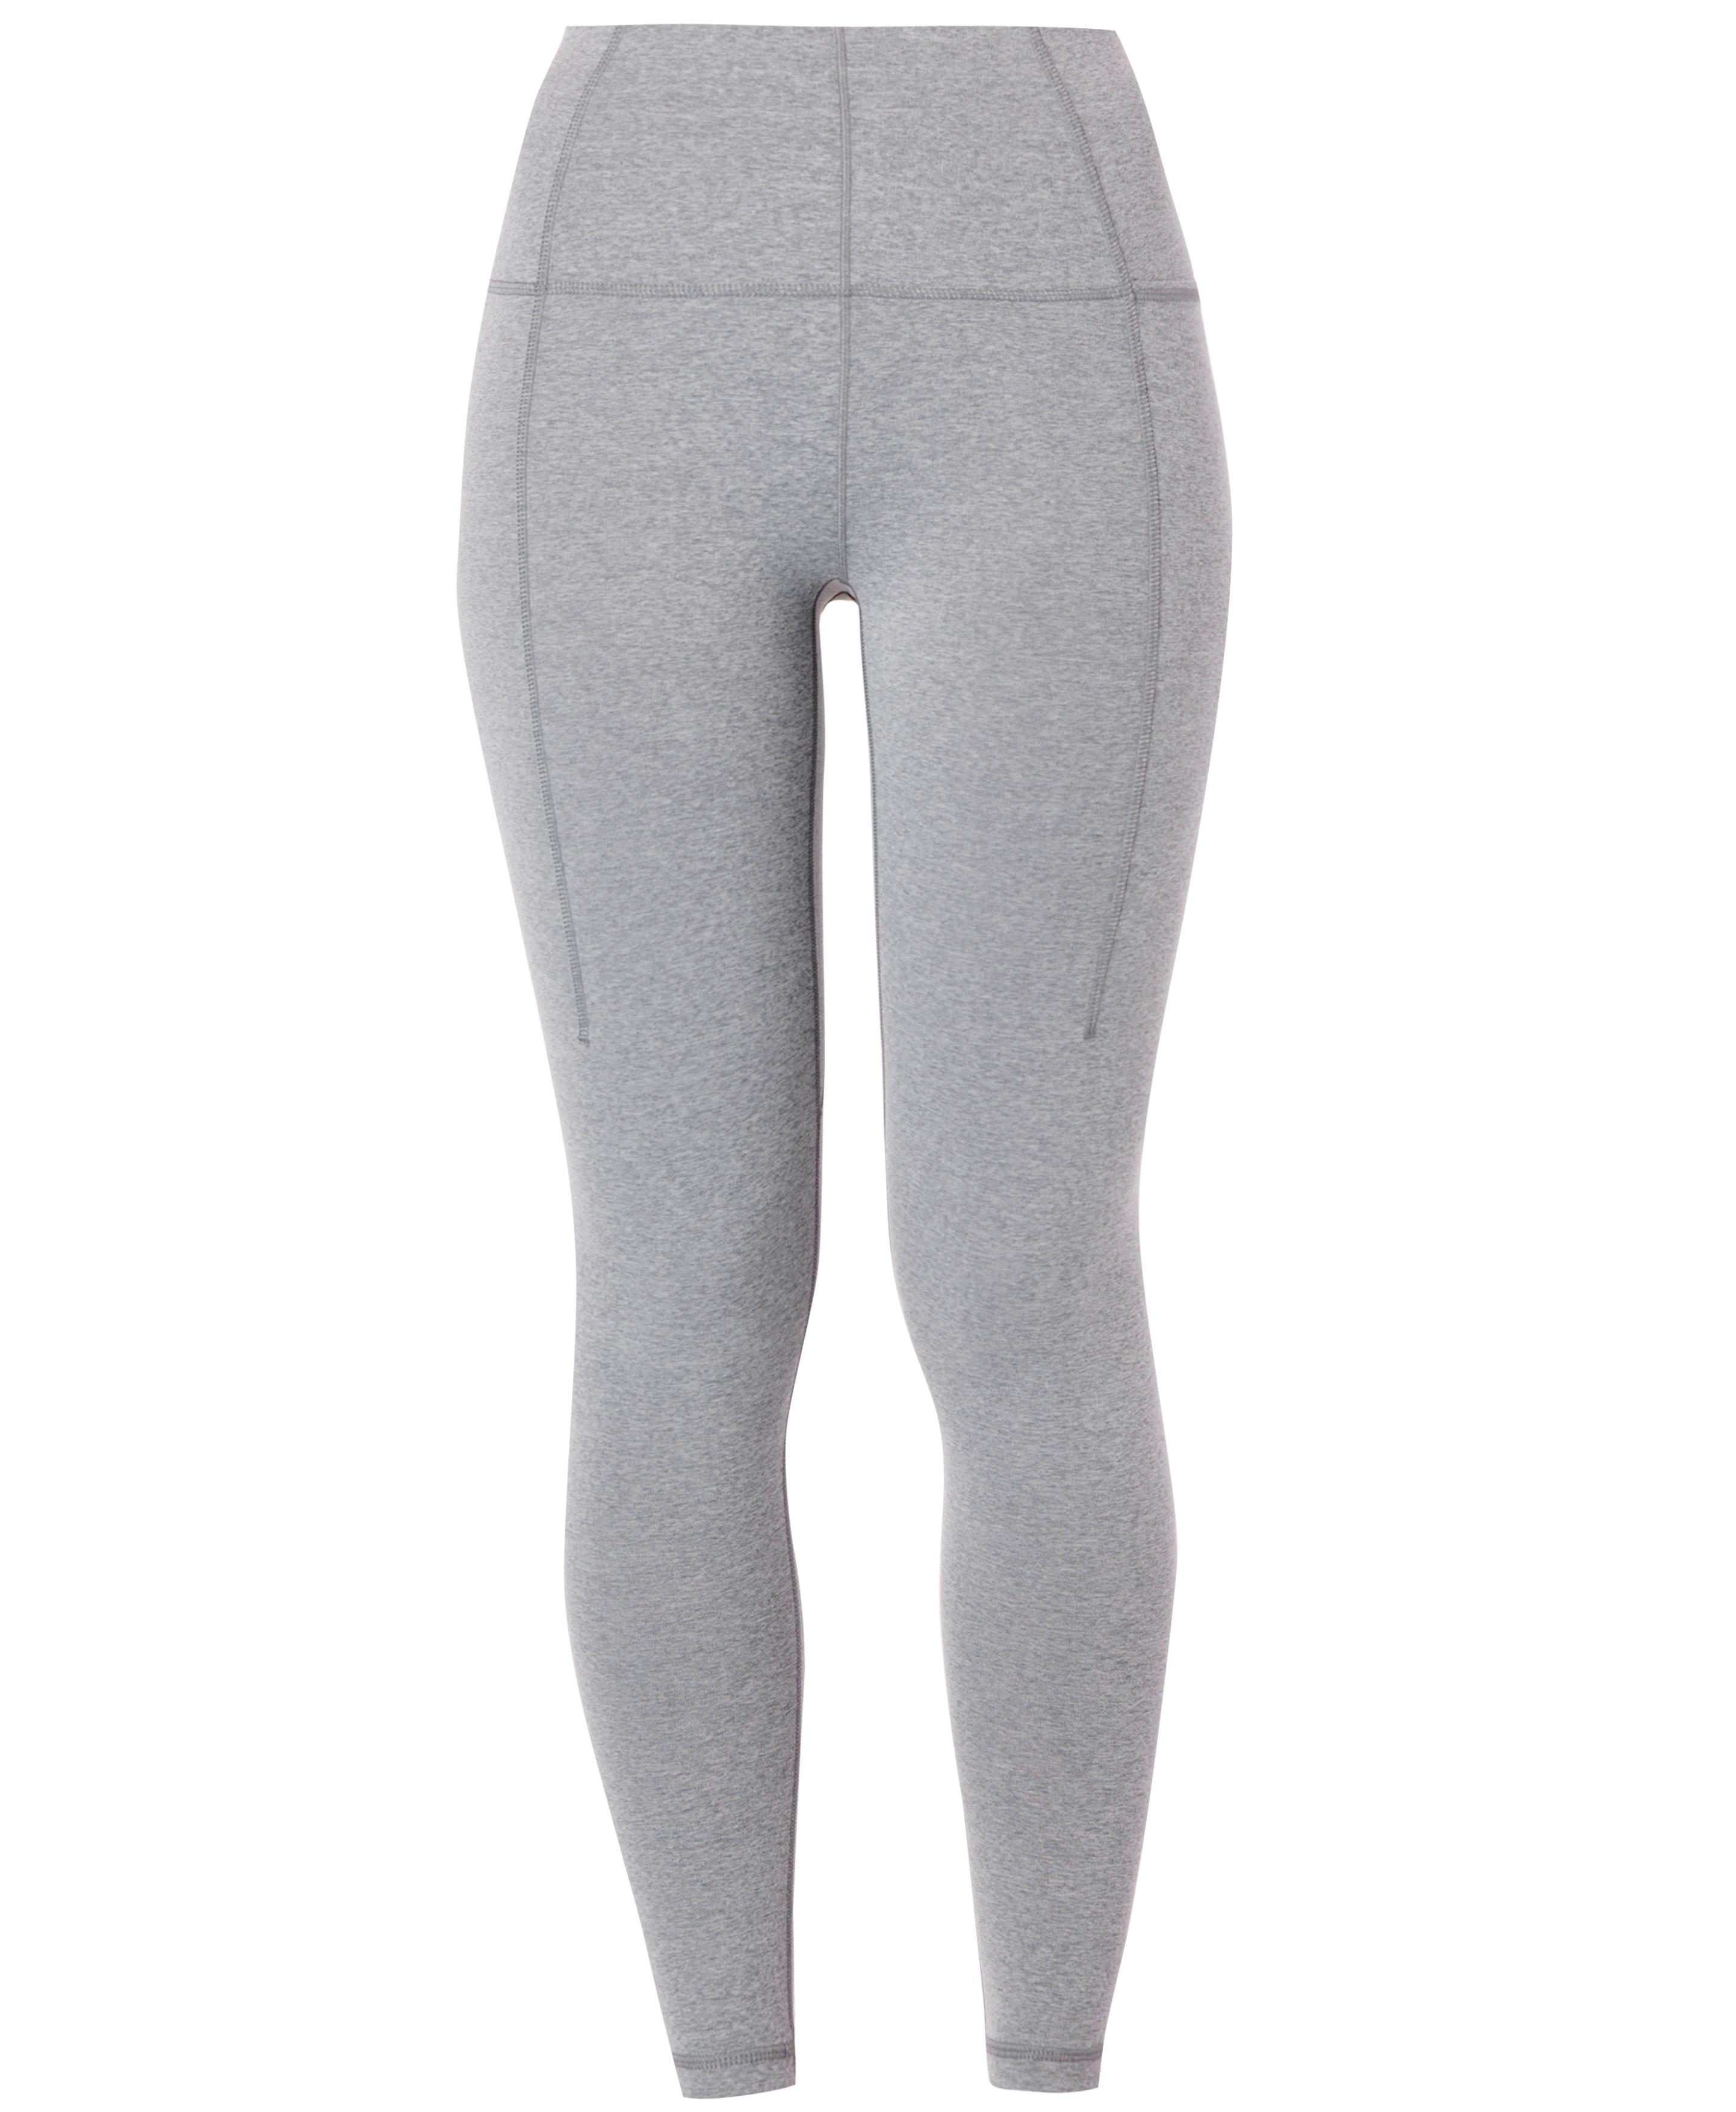 Super soft leggings grey full length NWT large